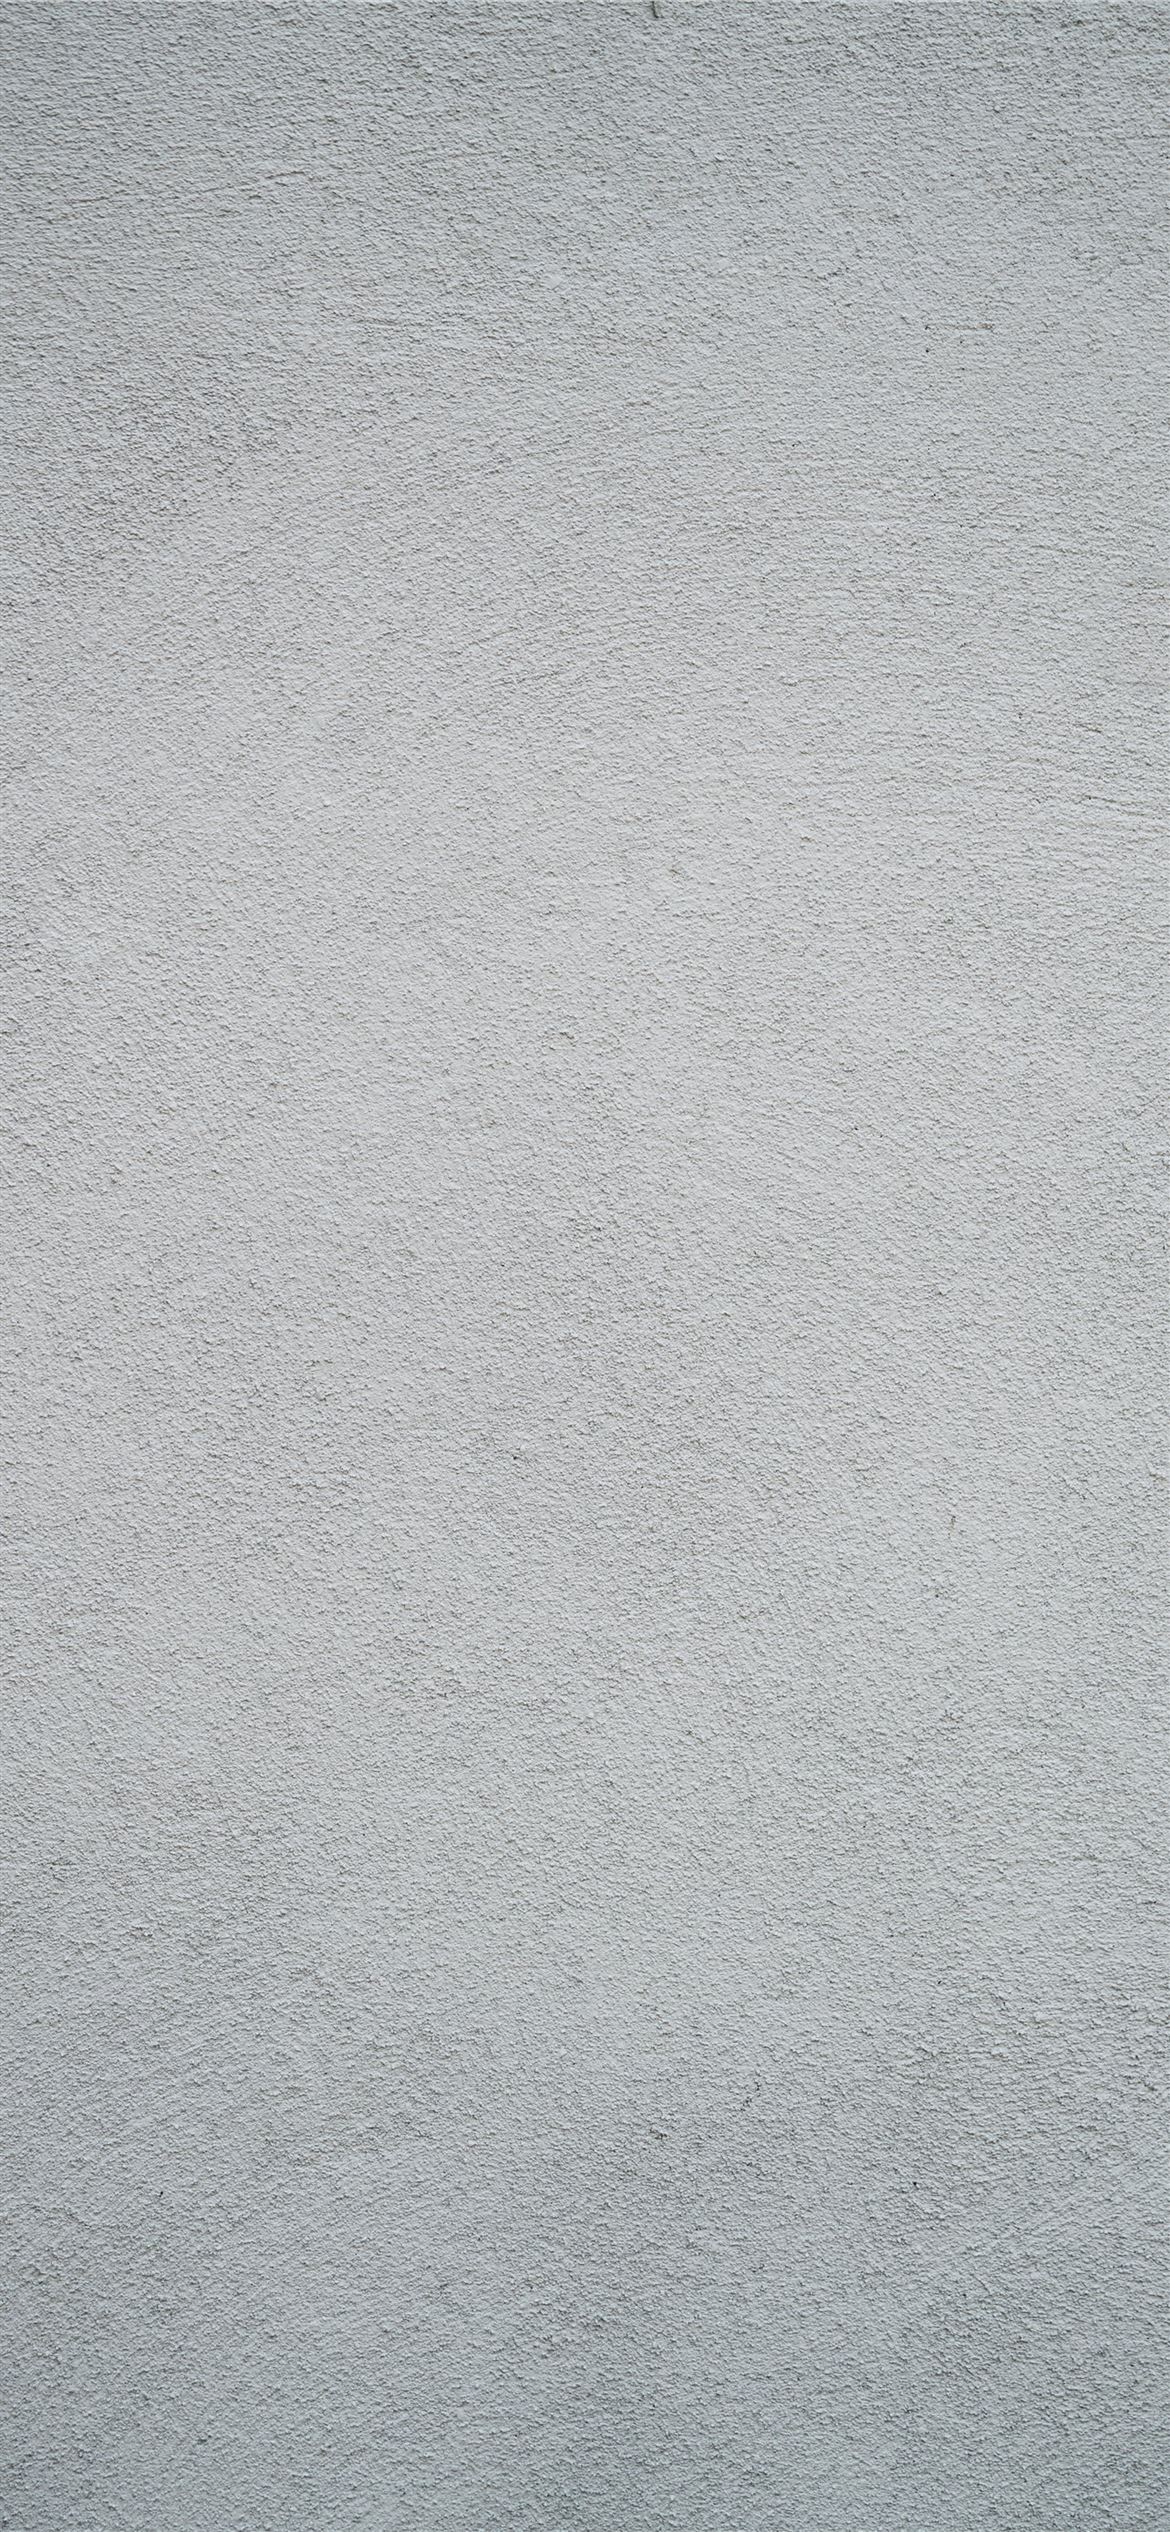 Plain Gray HD Gray Wallpapers  HD Wallpapers  ID 44593